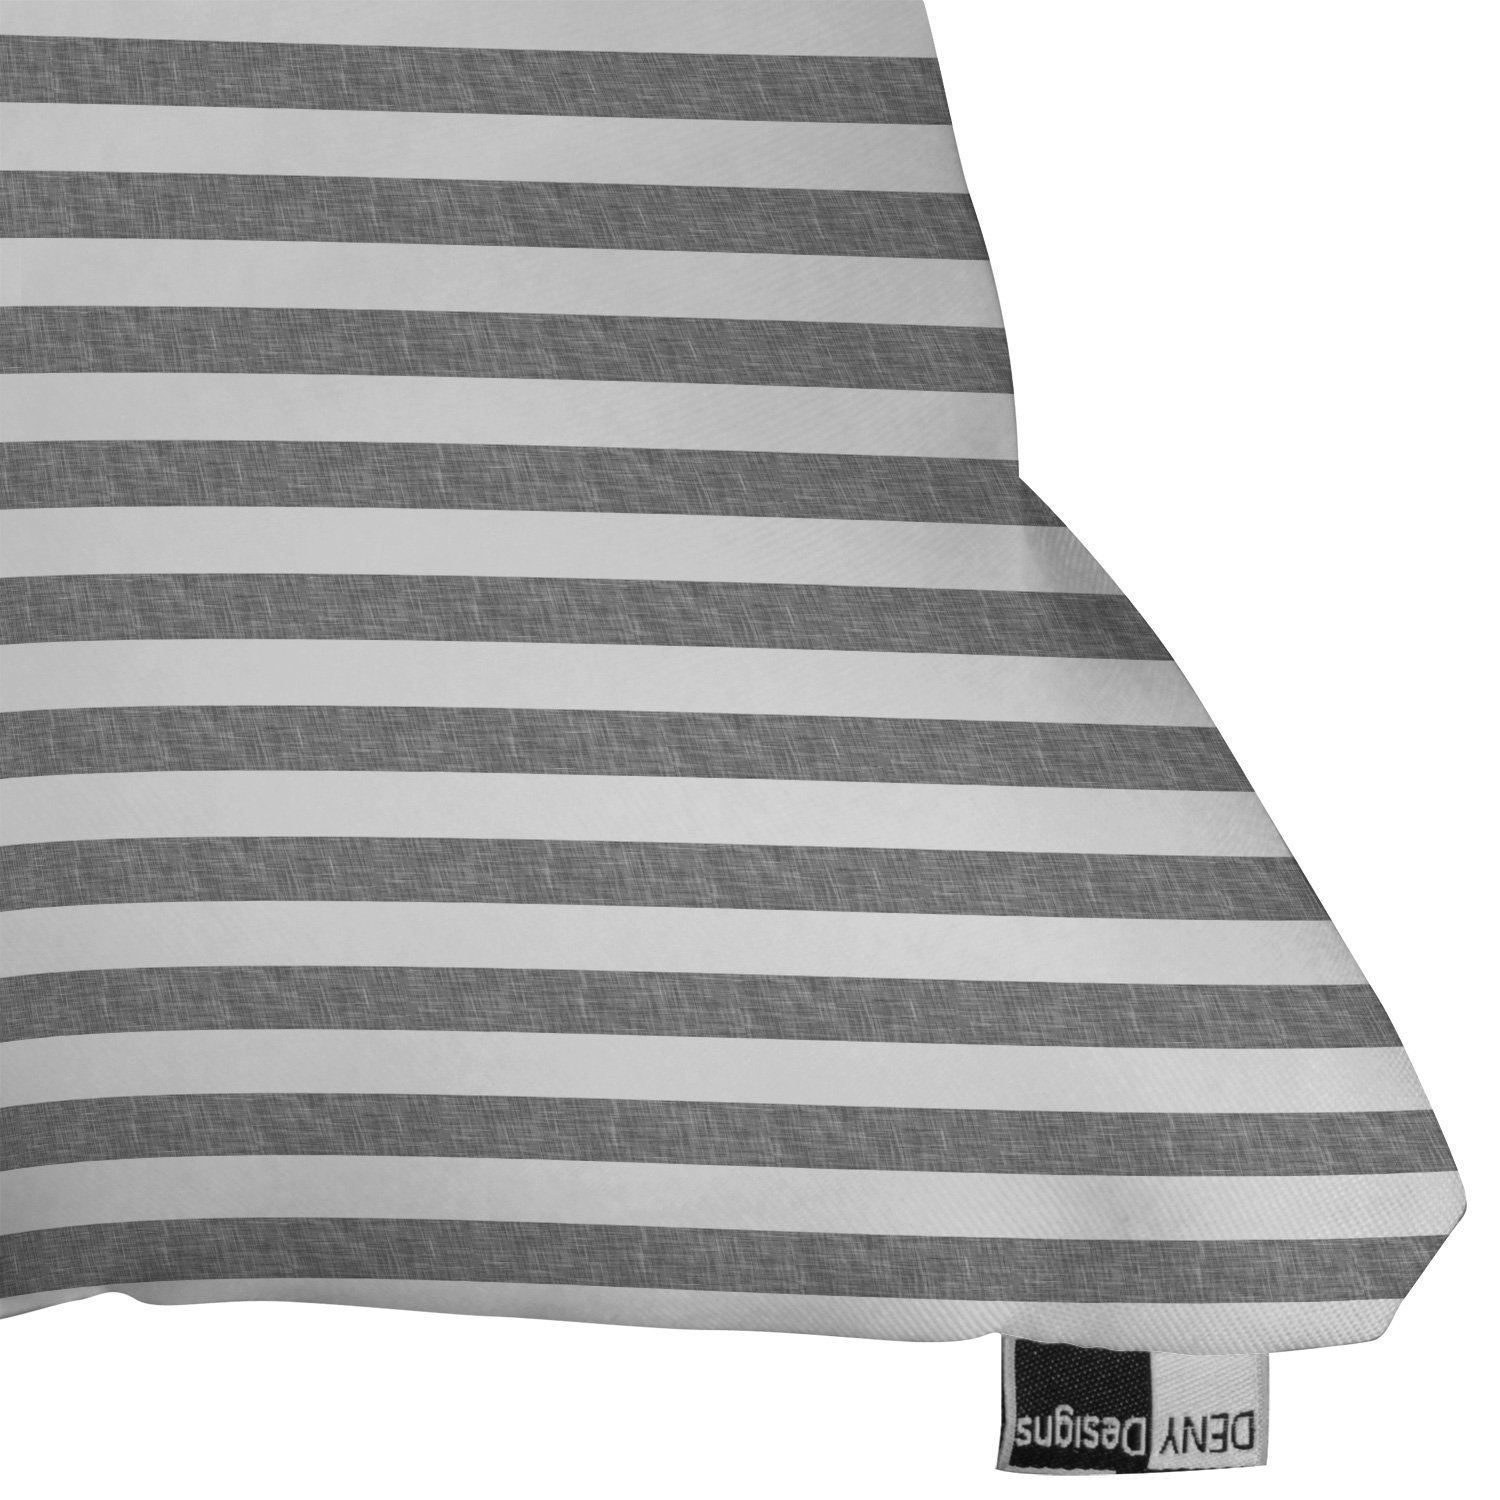 Little Arrow Design Co Stripes in Grey Outdoor Throw Pillow - 20"x20" - Image 1